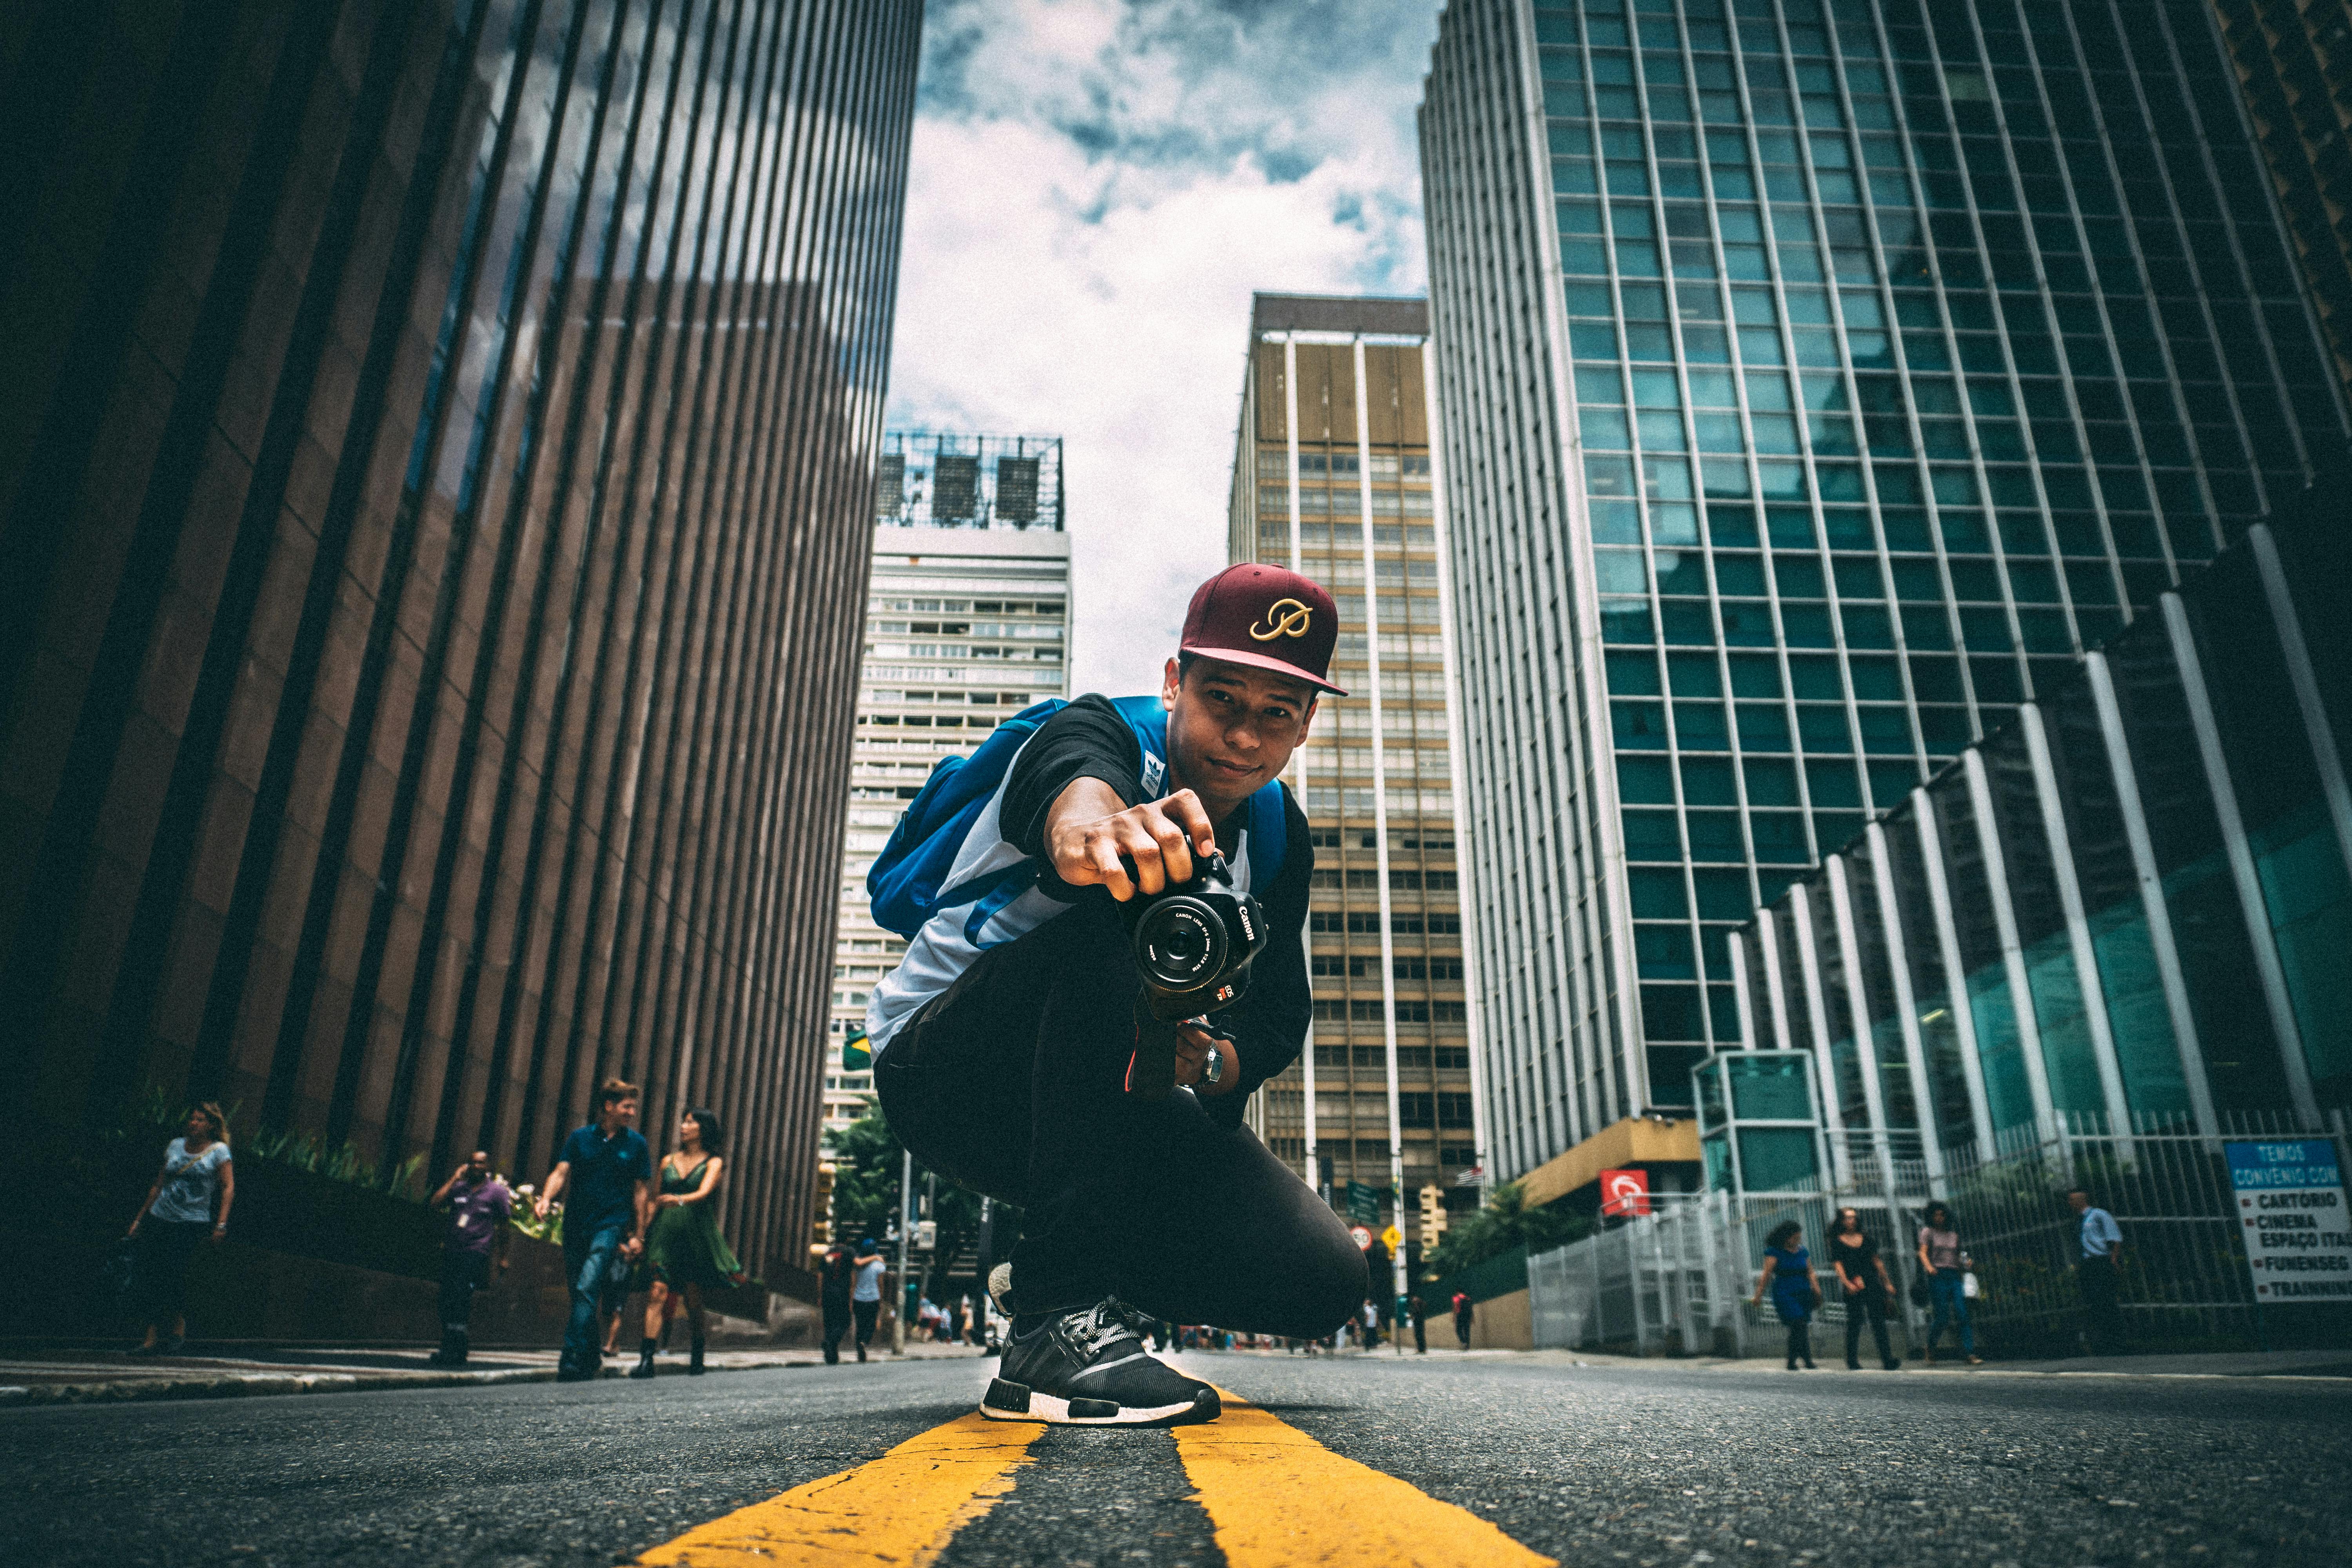 International student on skateboard in city enjoying study abroad